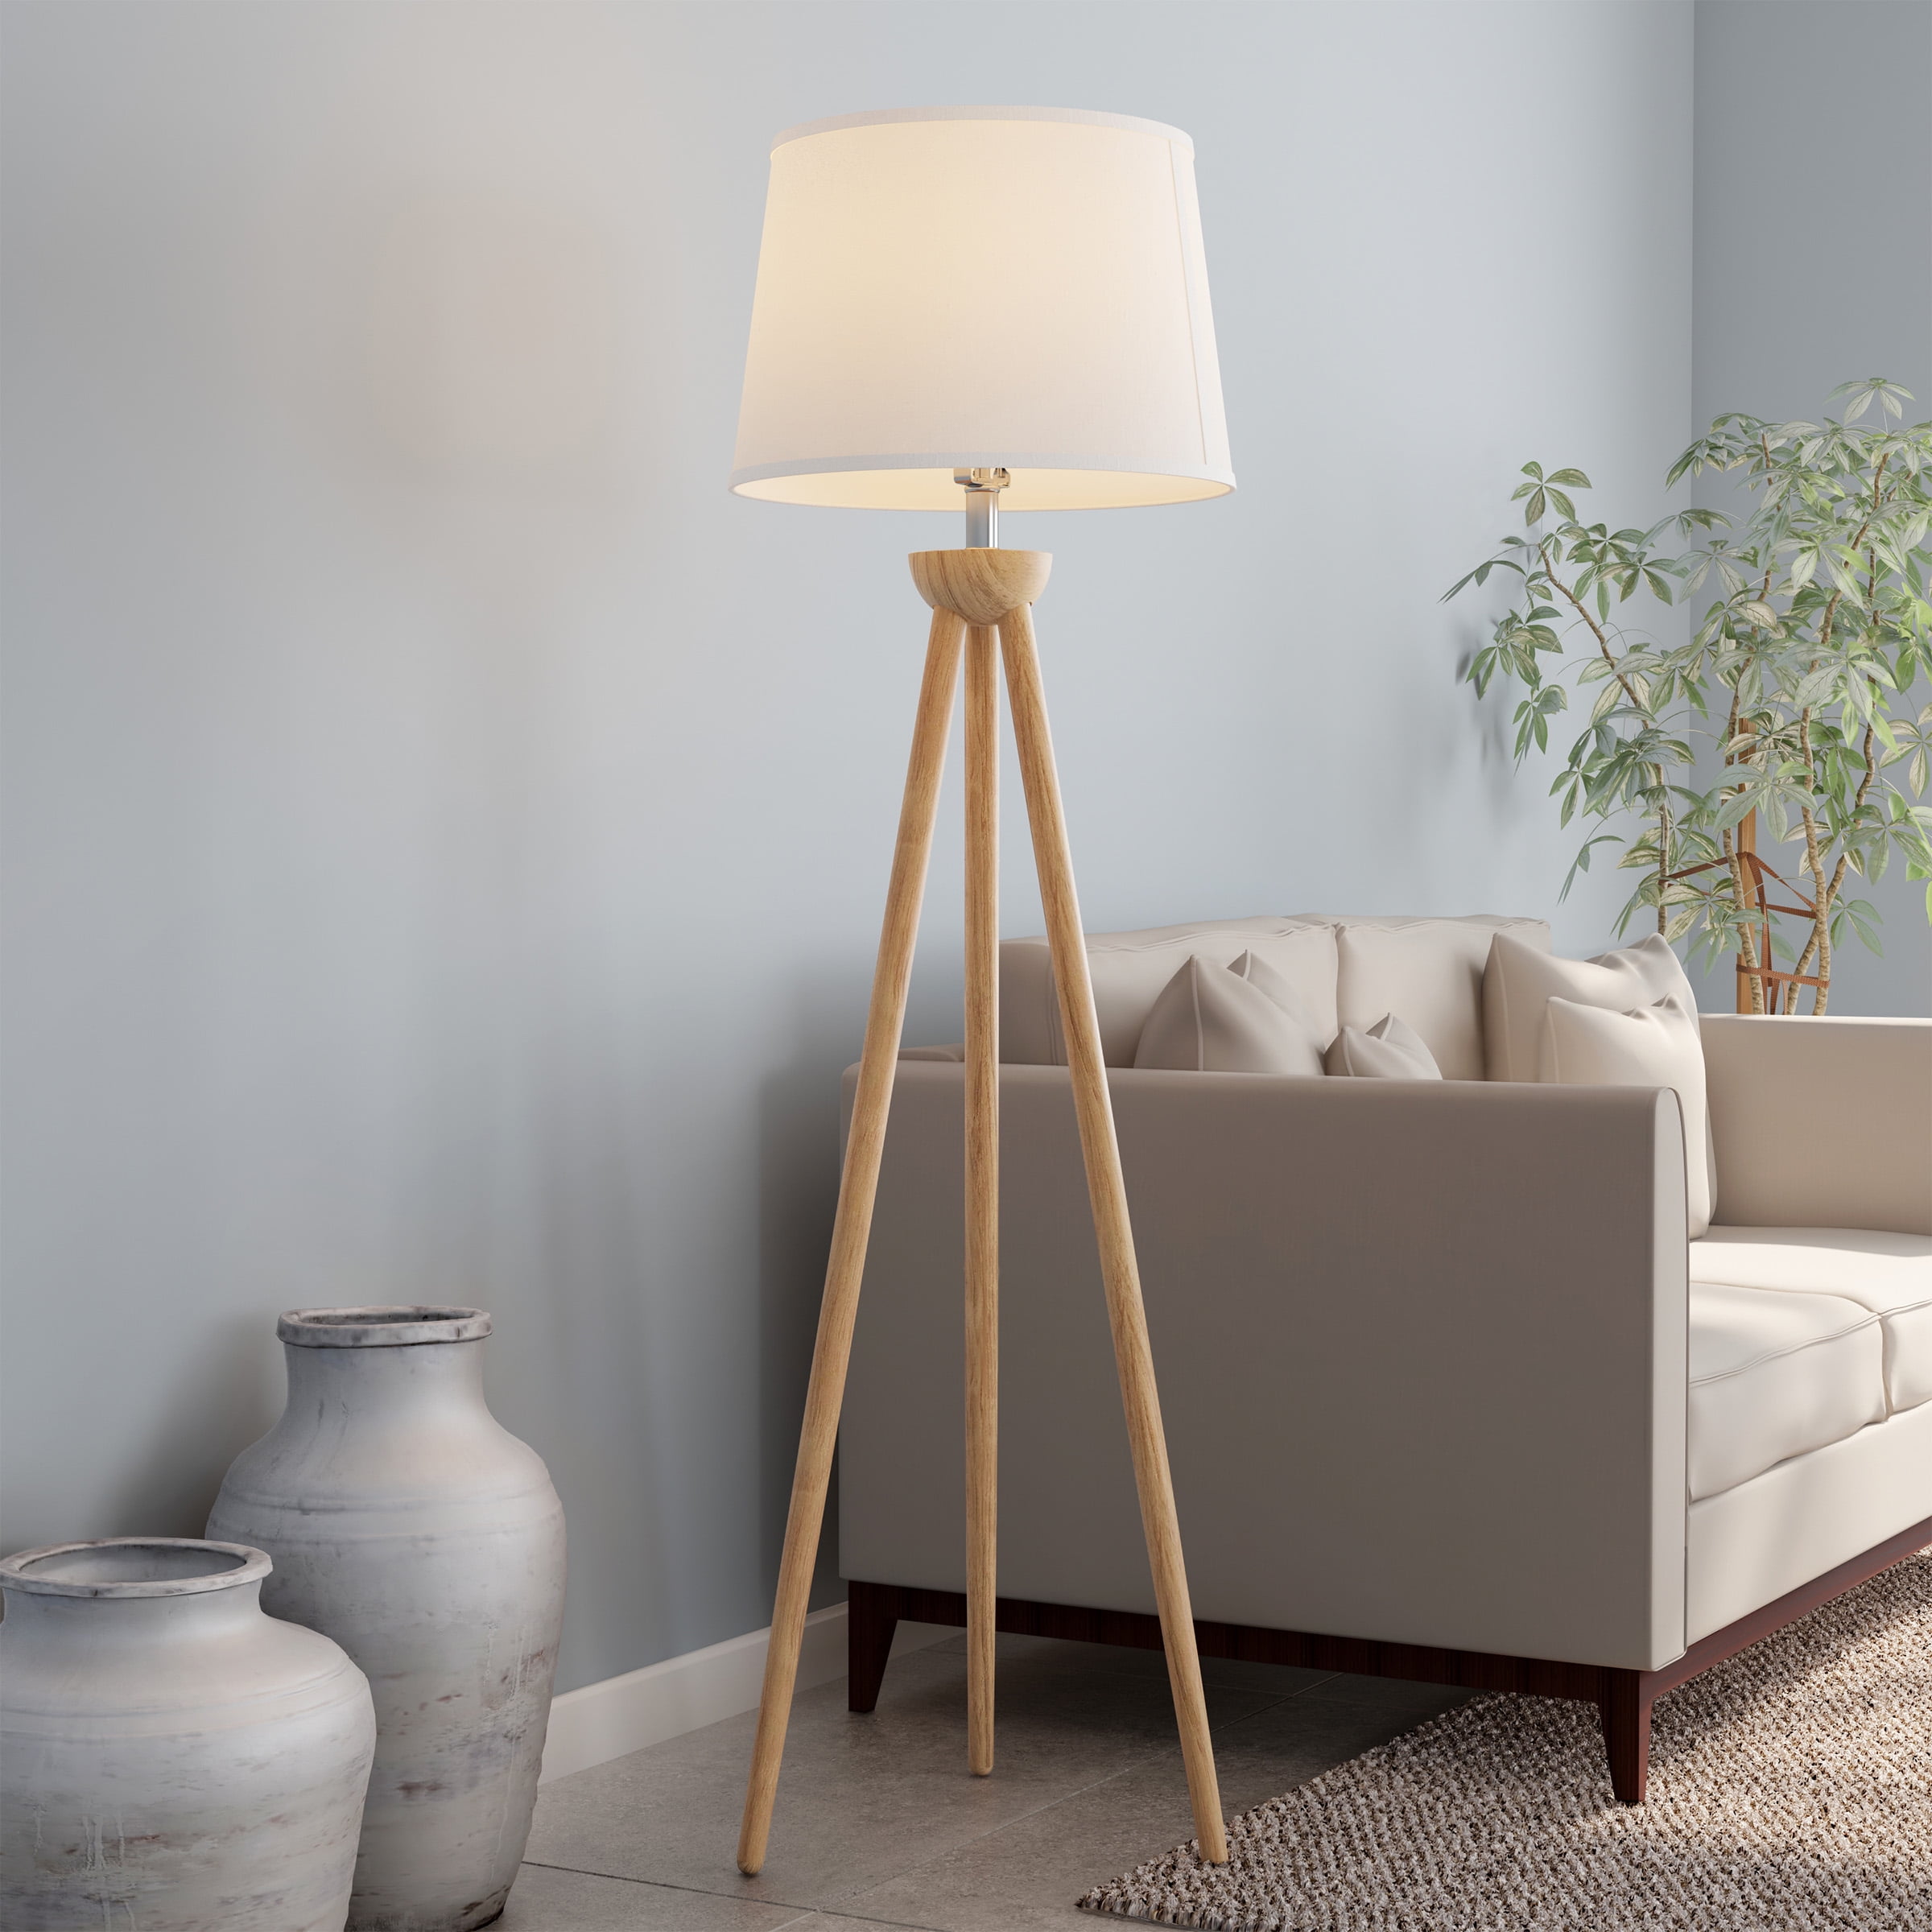 Tripod Modern Floor Lamp LED BulbNatural Oak Wood with